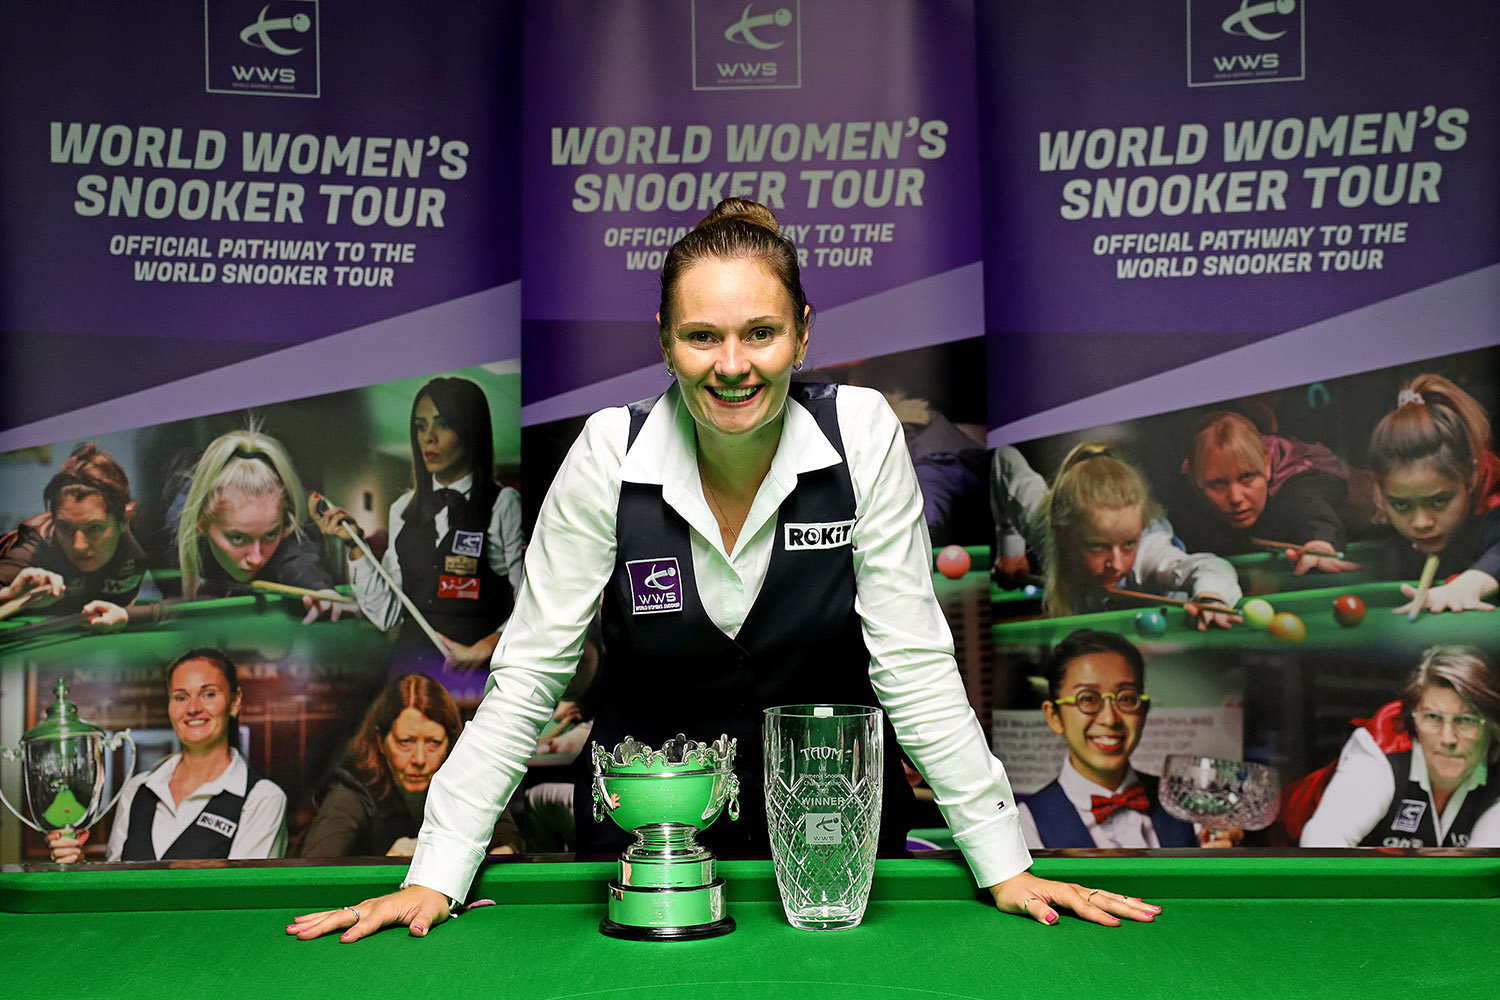 Taom UK Womens Snooker Championship